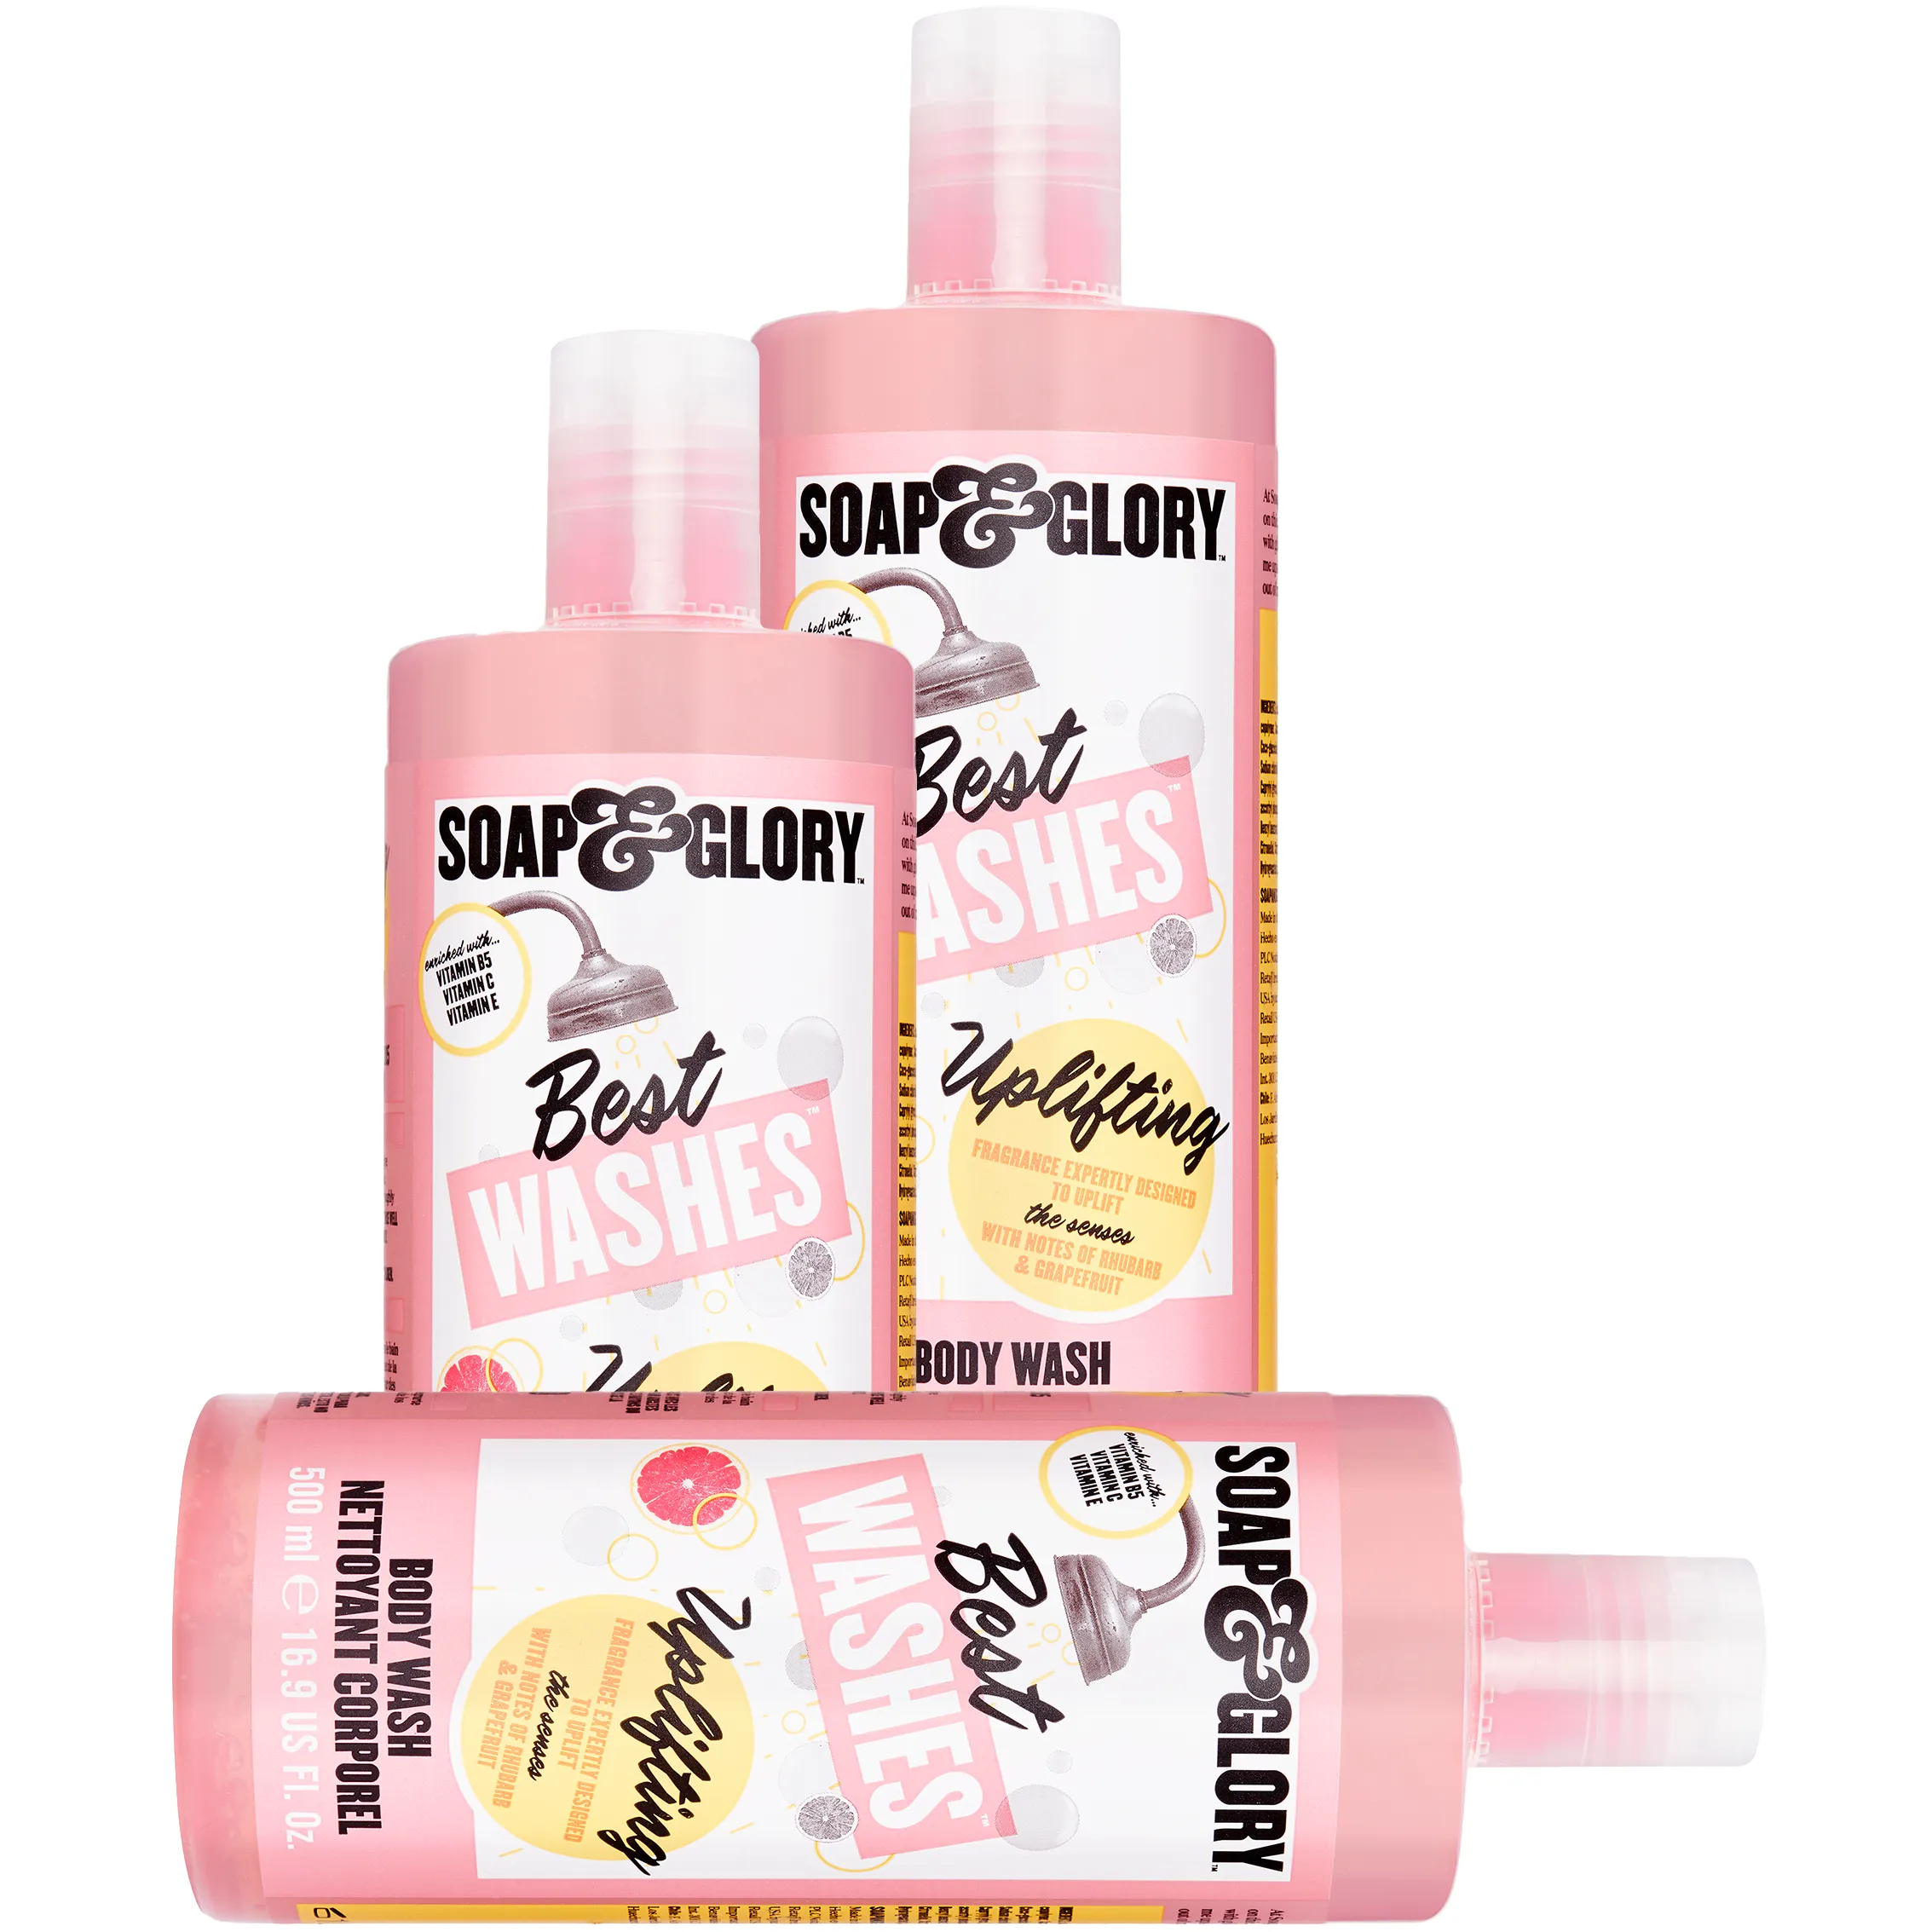 Free Soap & Glory Core Skincare Product Samples